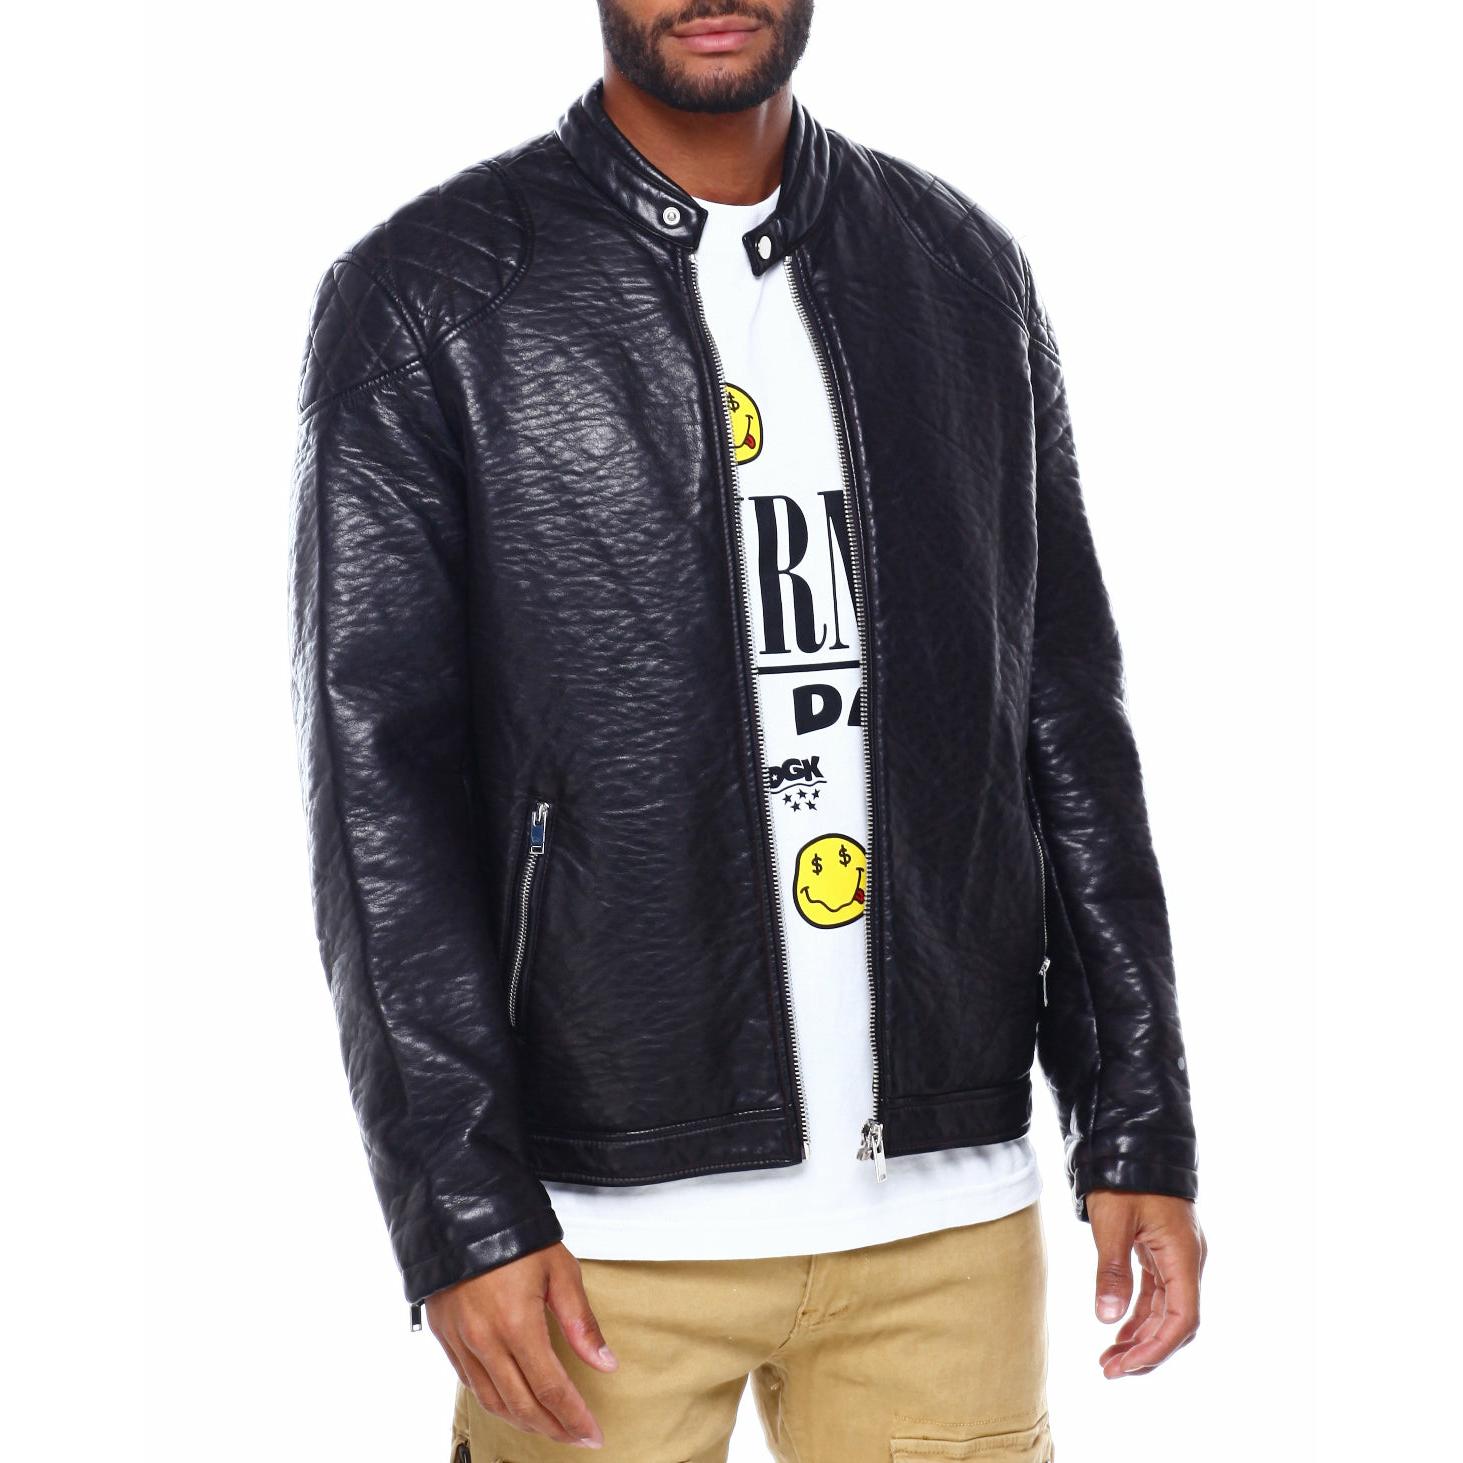 Mens black full zip-up closure pu leather Jacket